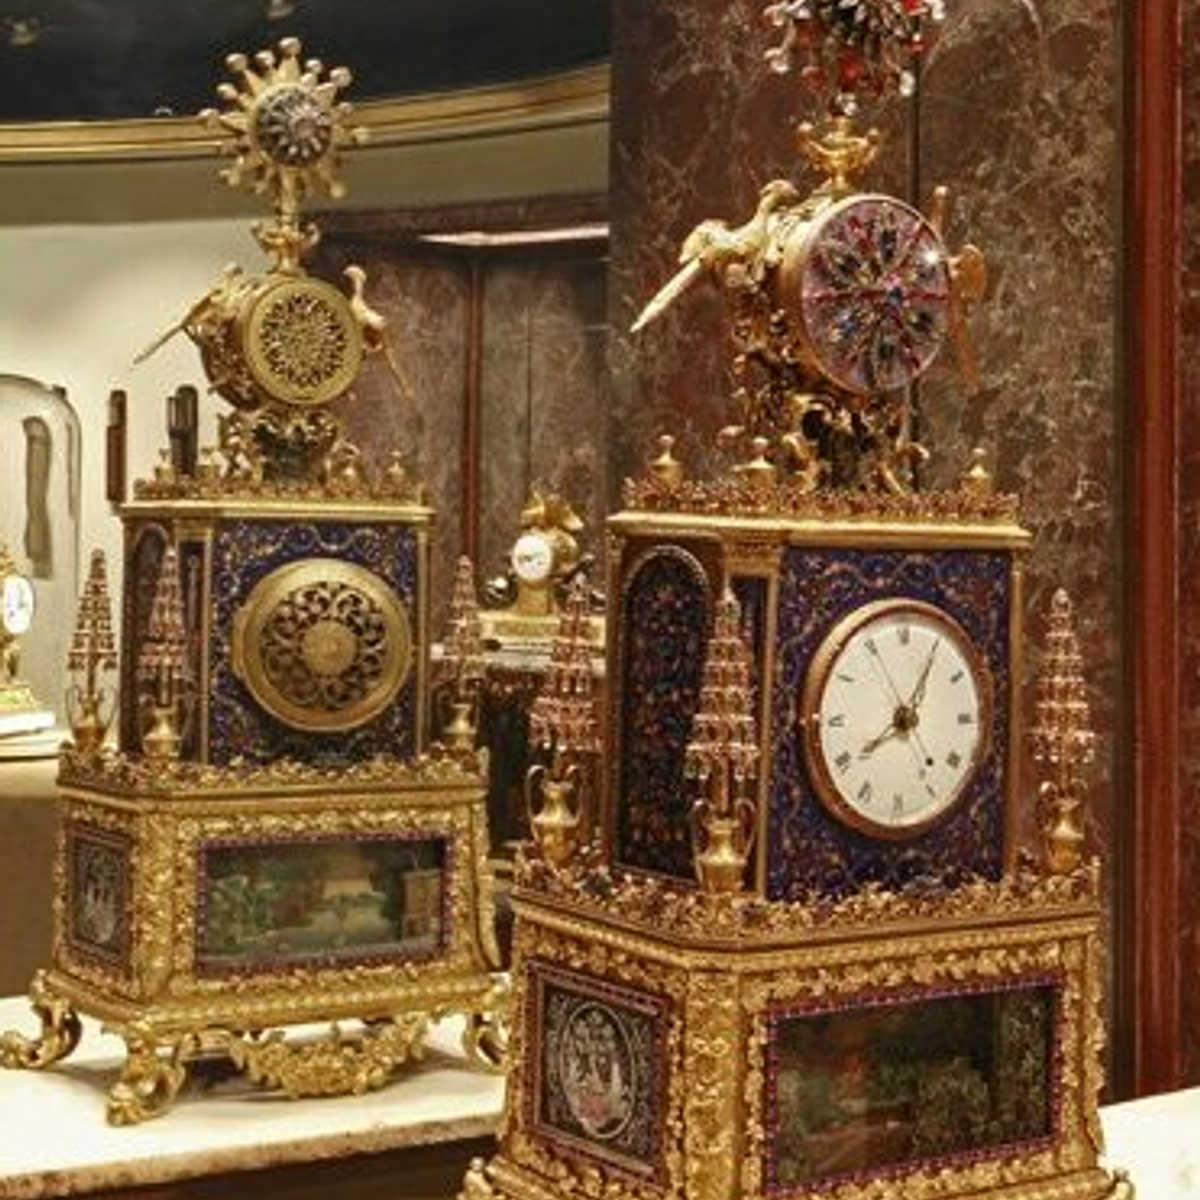 Musée d'horlogerie de Grassy